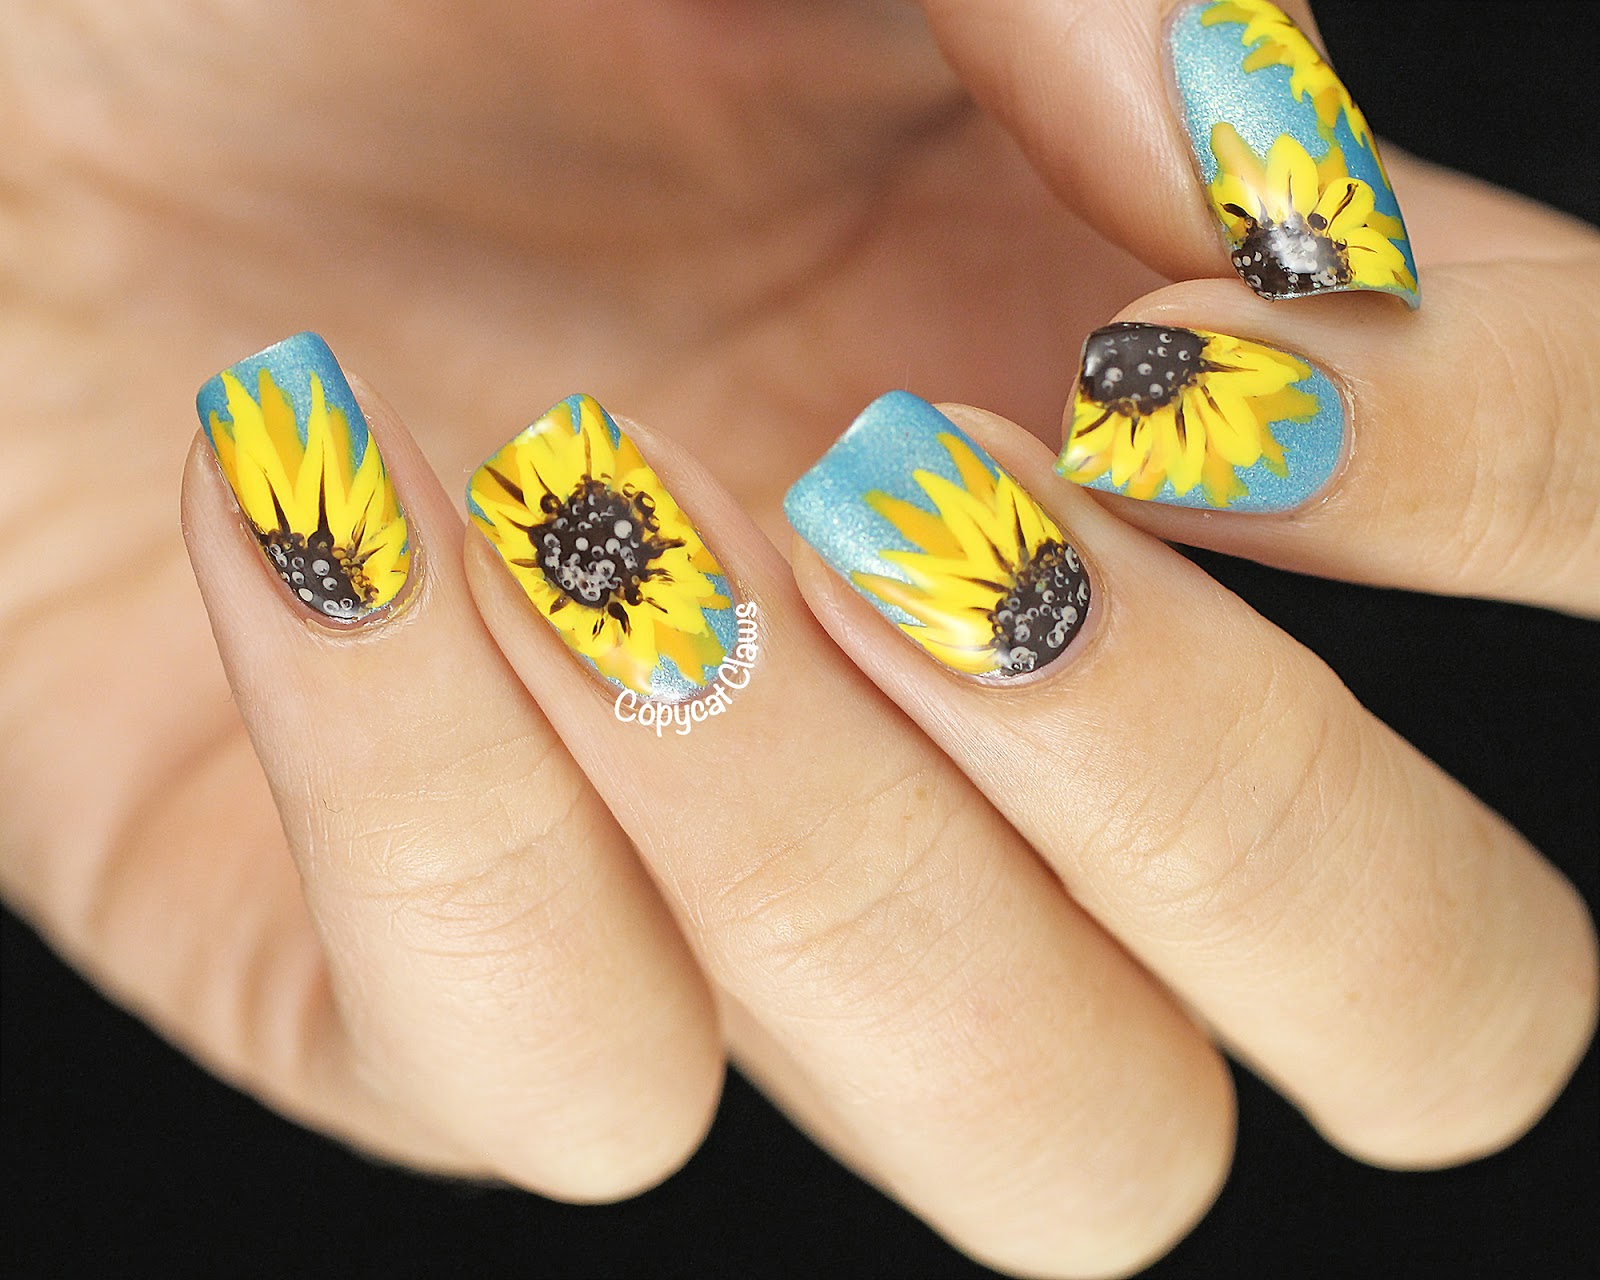 1. Sunflower Nail Art Designs - wide 4